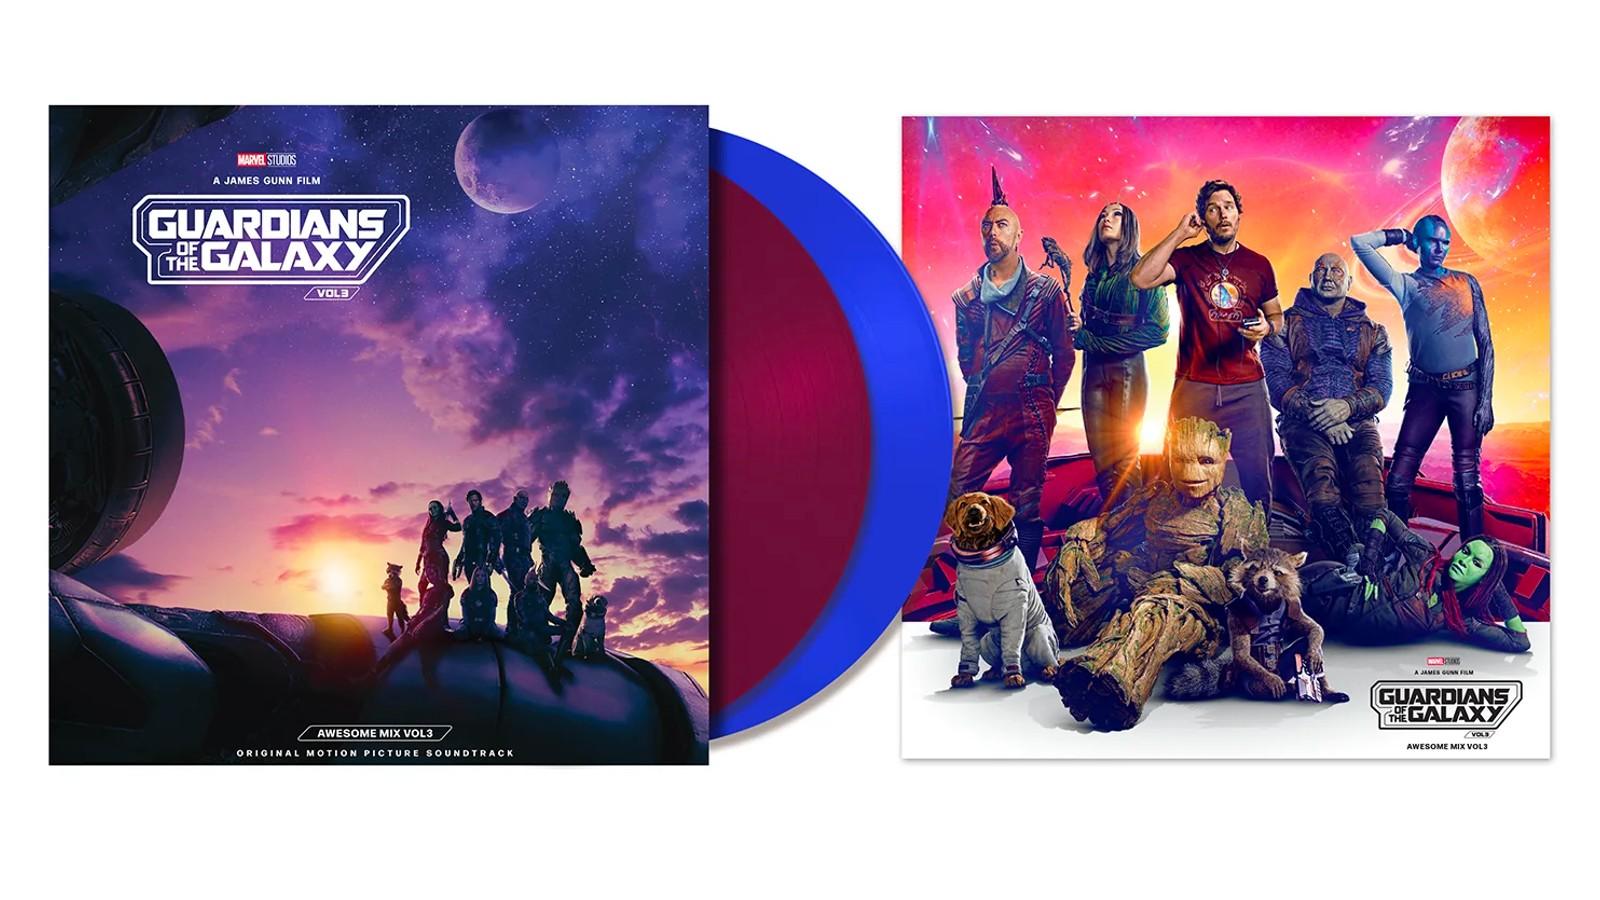 The Guardians of the Galaxy Vol 3 soundtrack vinyl